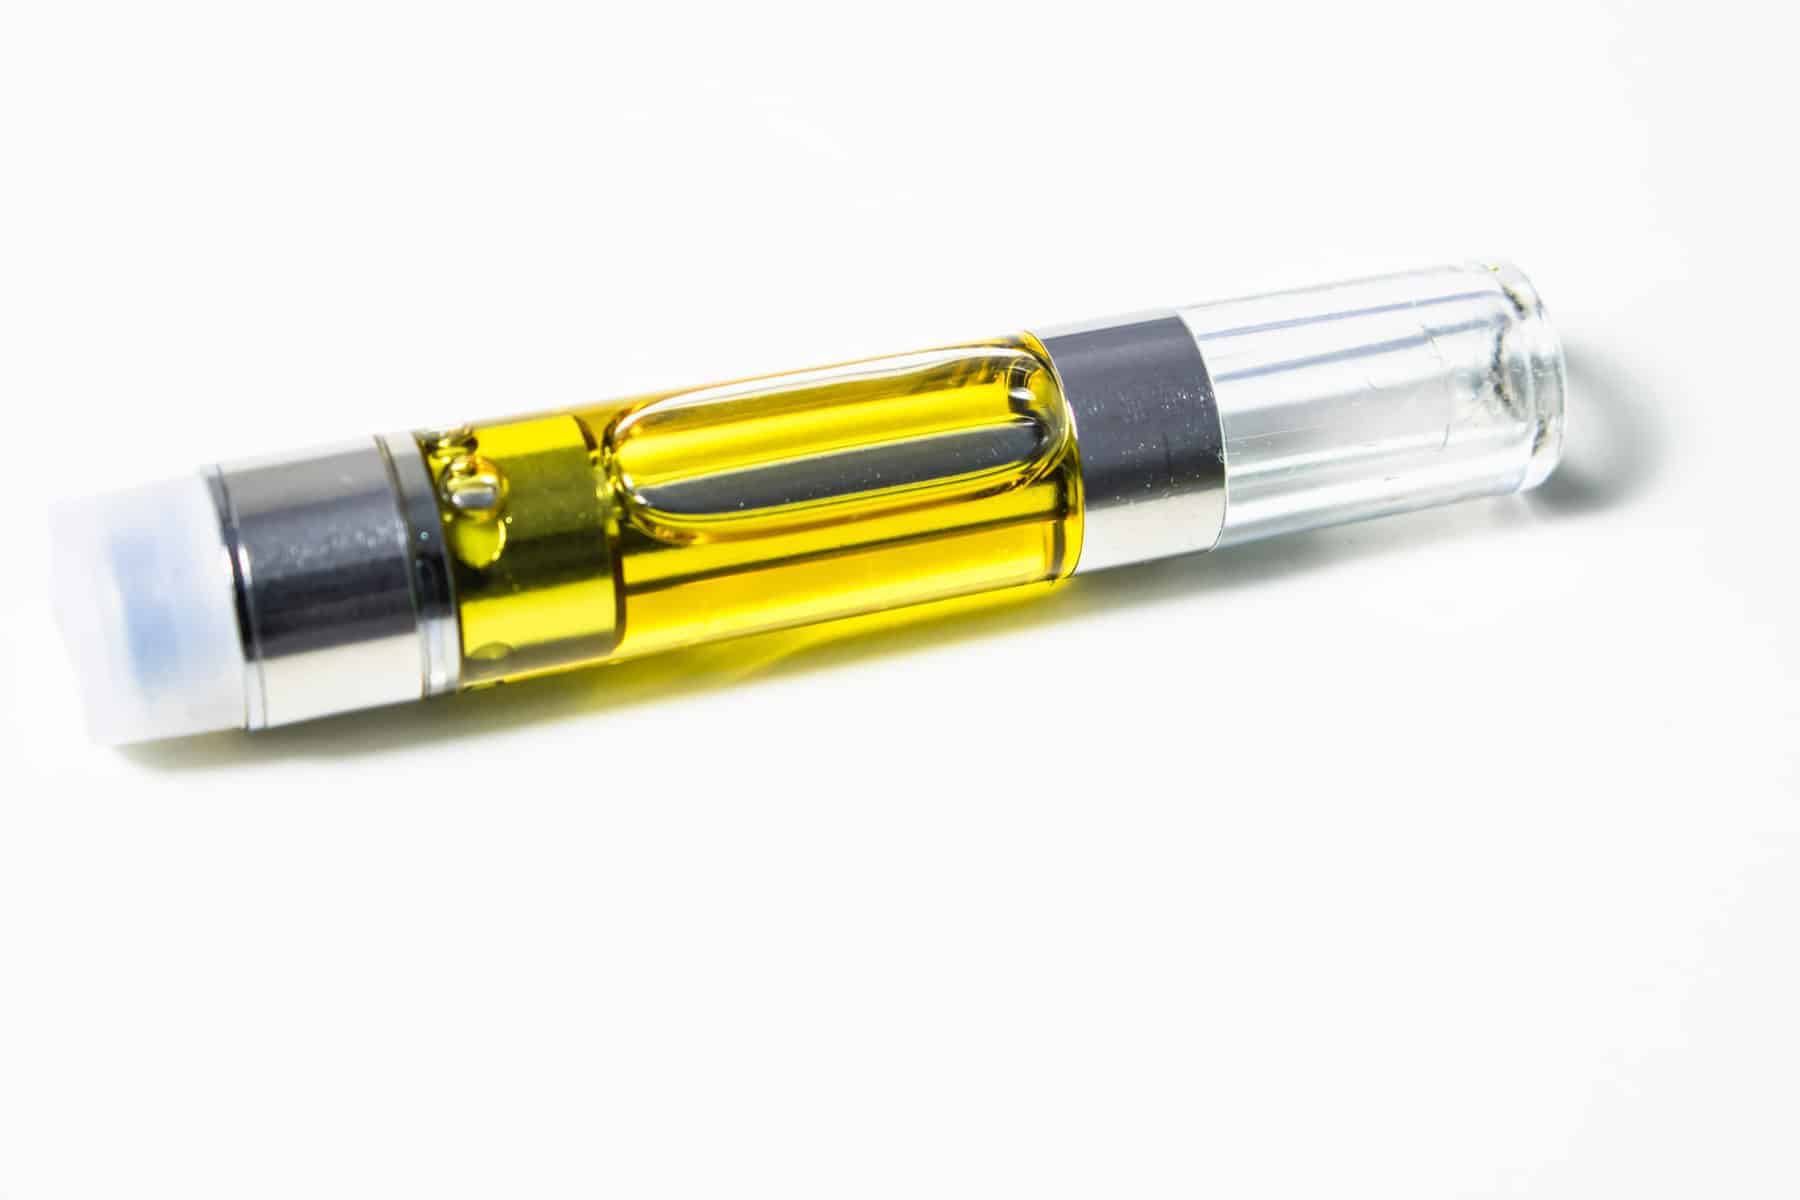 Cannabis distillate plus terpenes in vaporizor cartridge. How to tell if my thc cartridge is fake